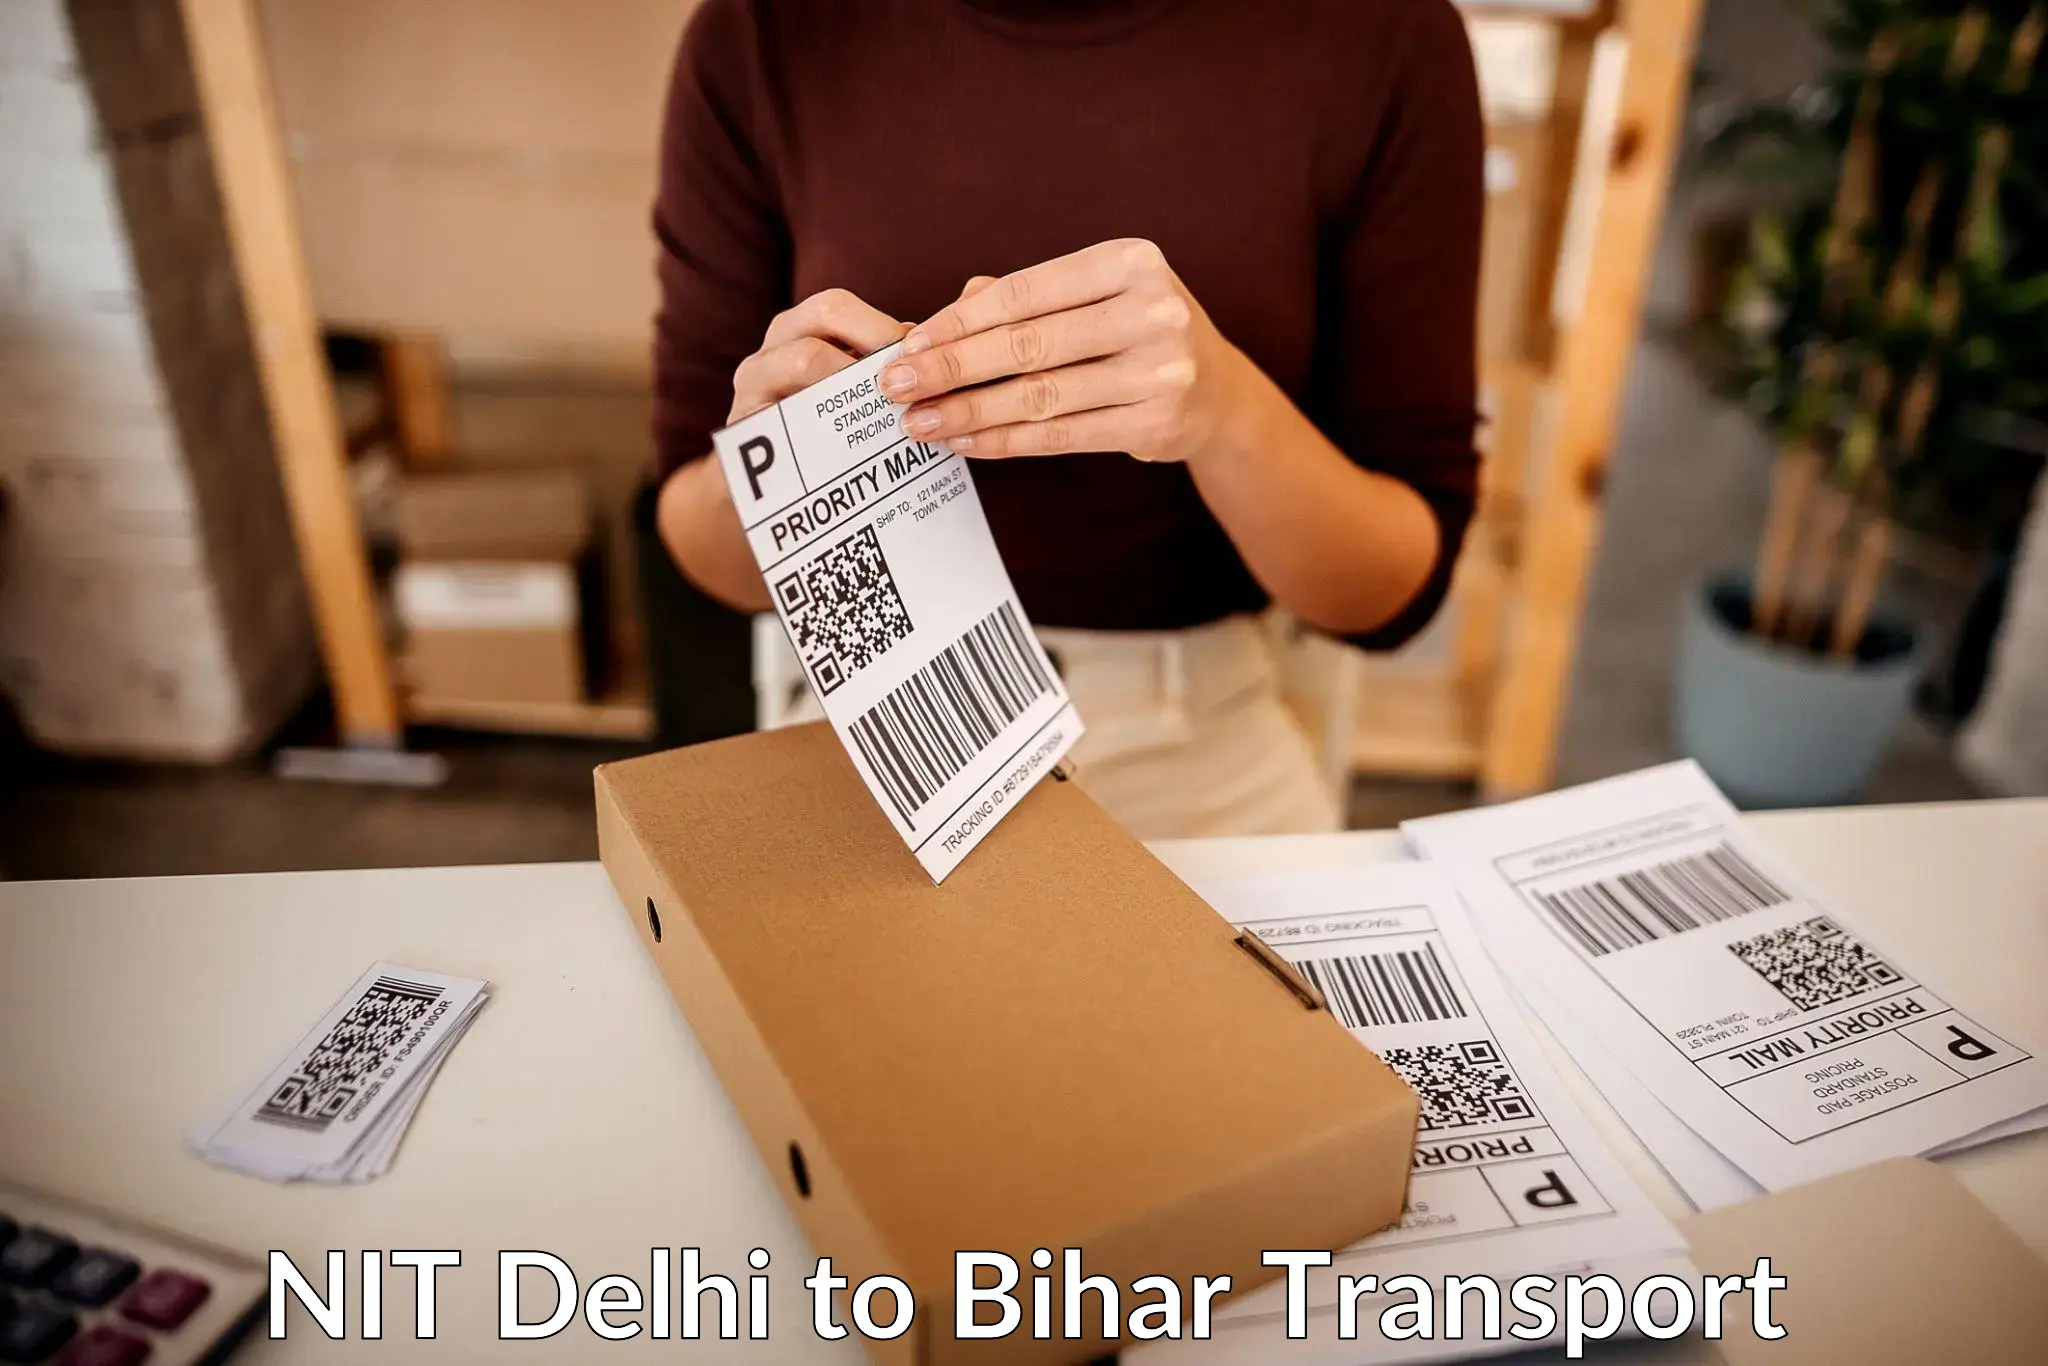 Online transport service NIT Delhi to Samastipur